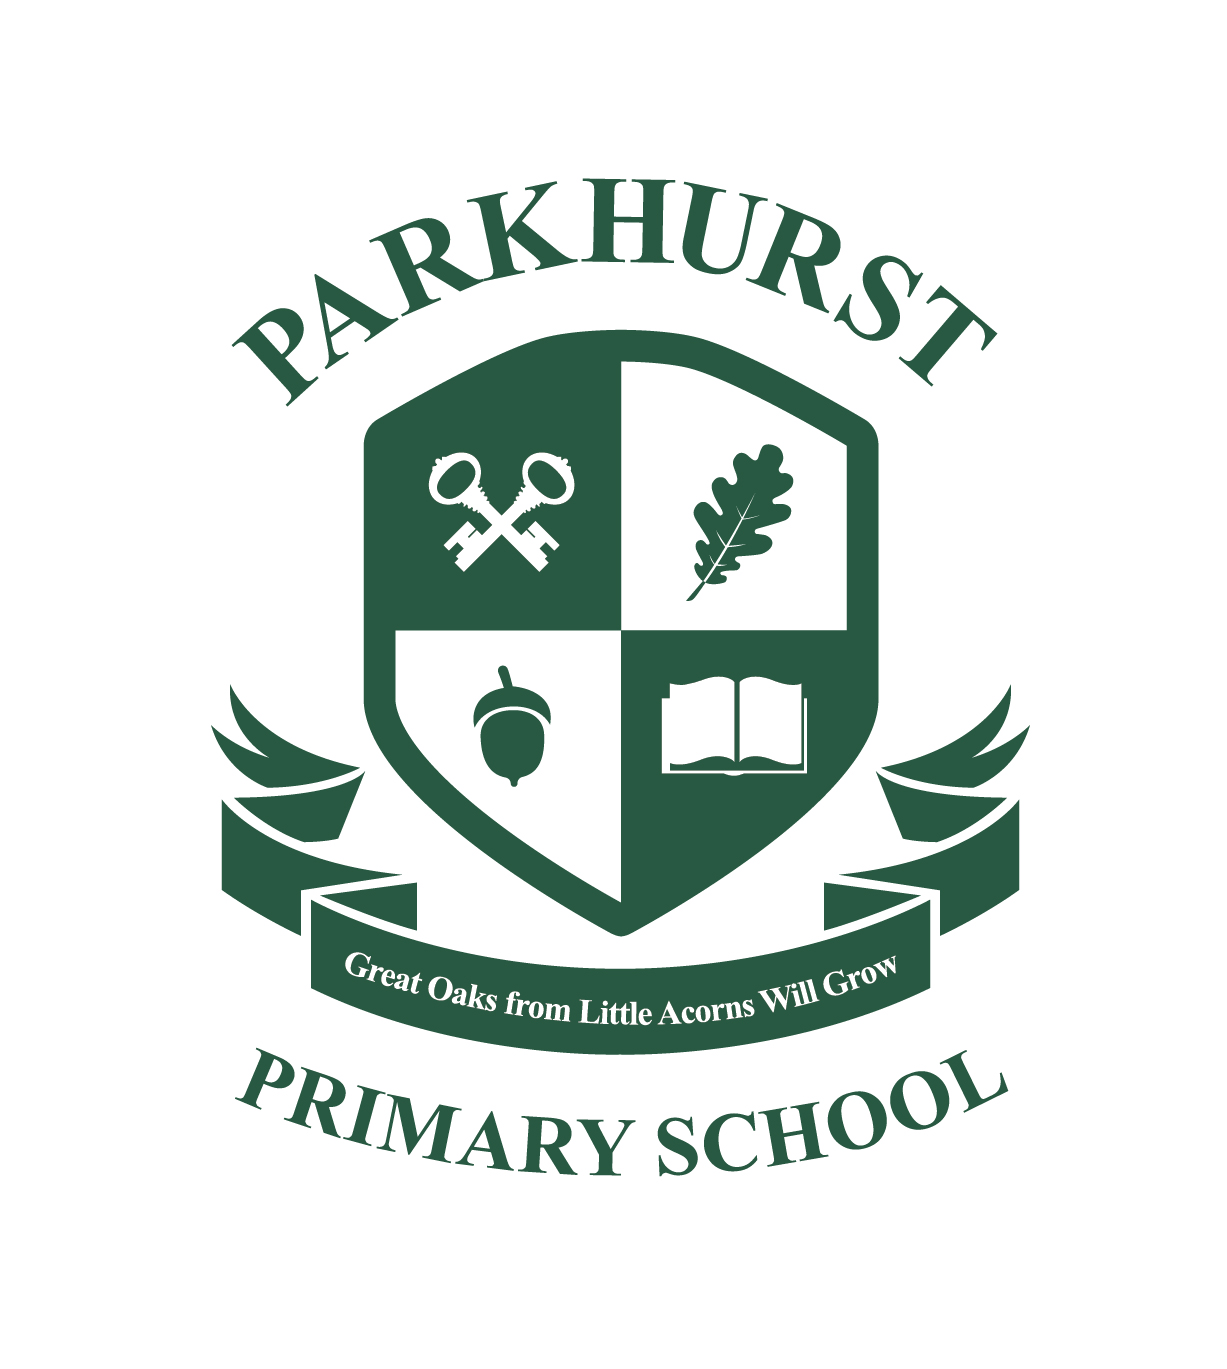 Parkhurst Primary School